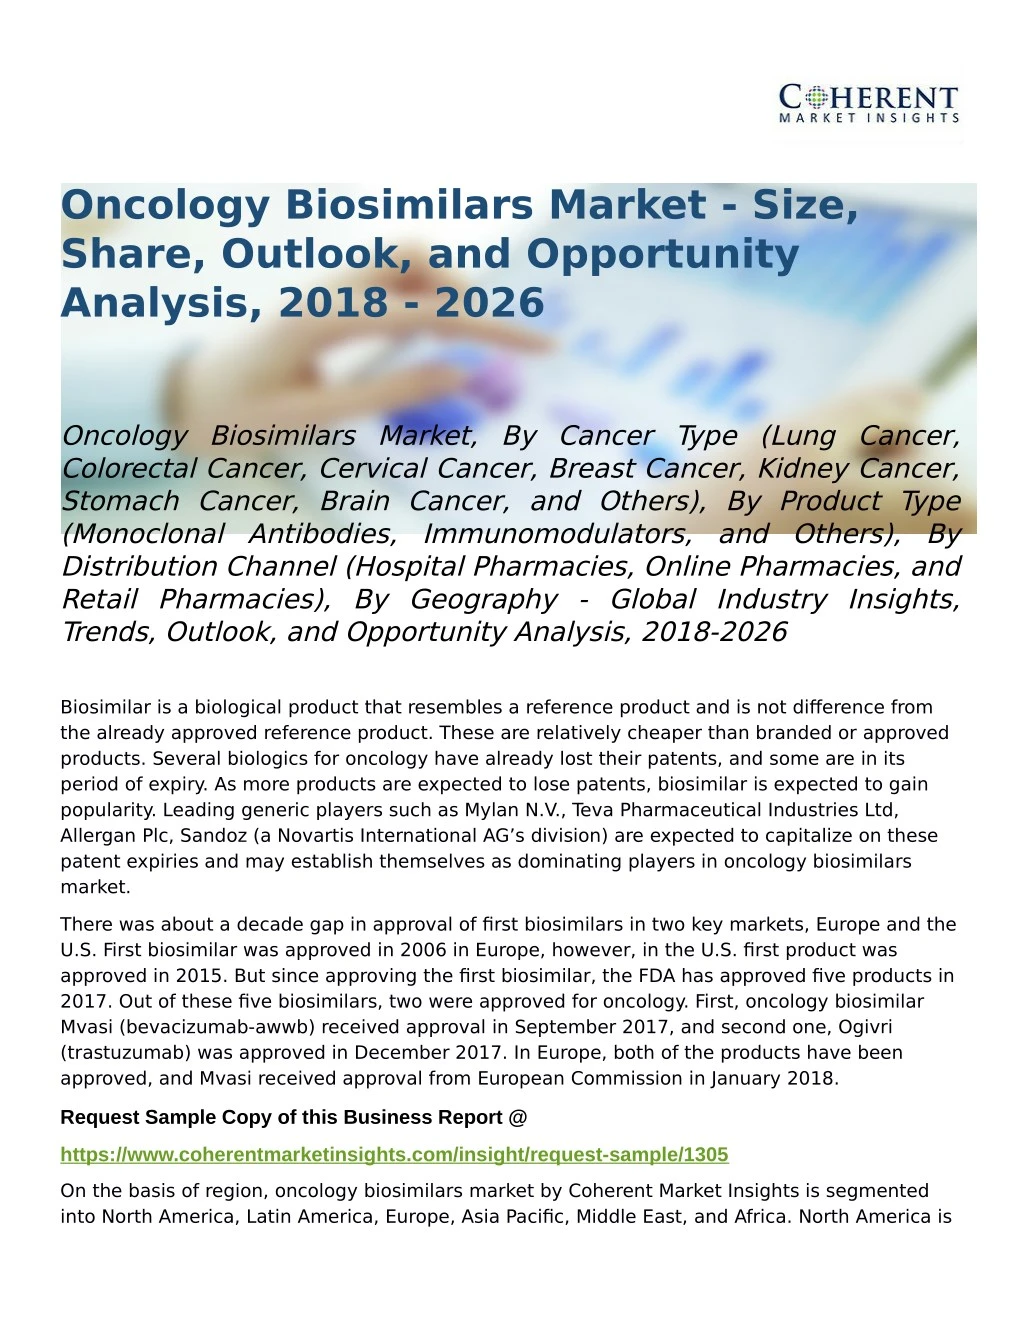 oncology biosimilars market size share outlook